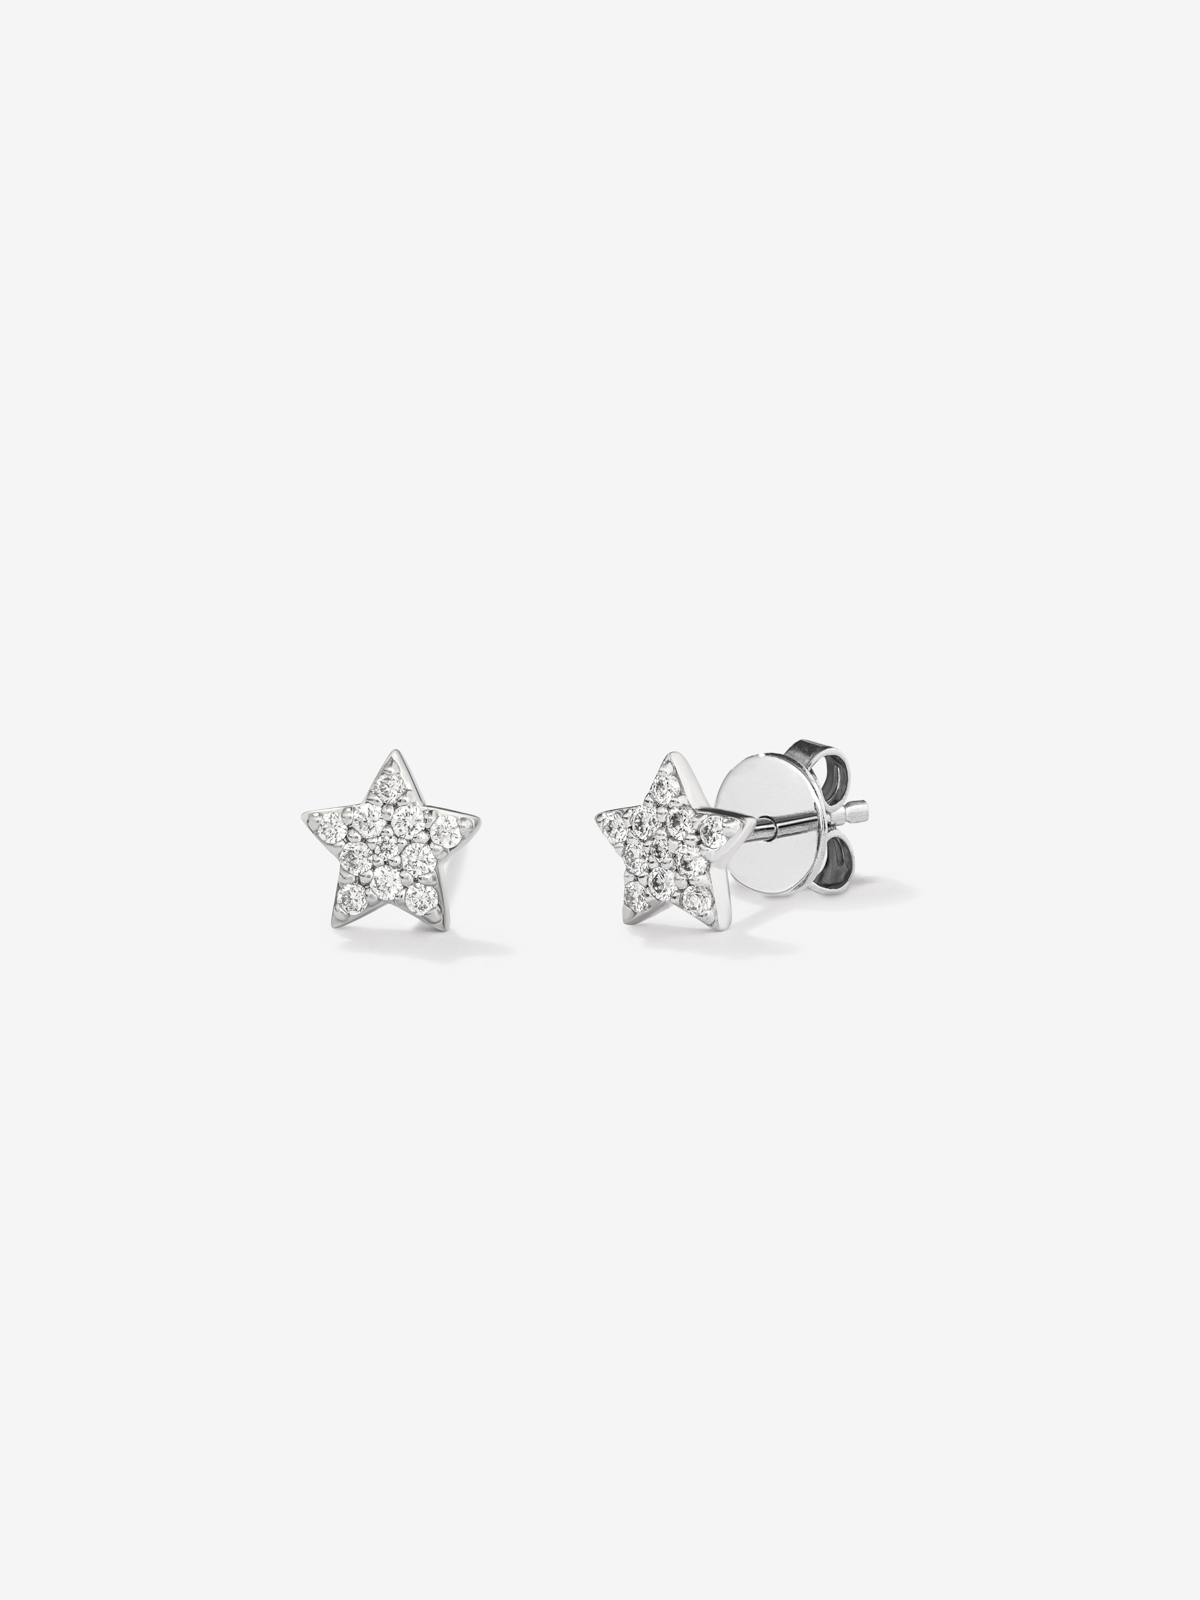 18K White Gold Star Earrings with Diamonds